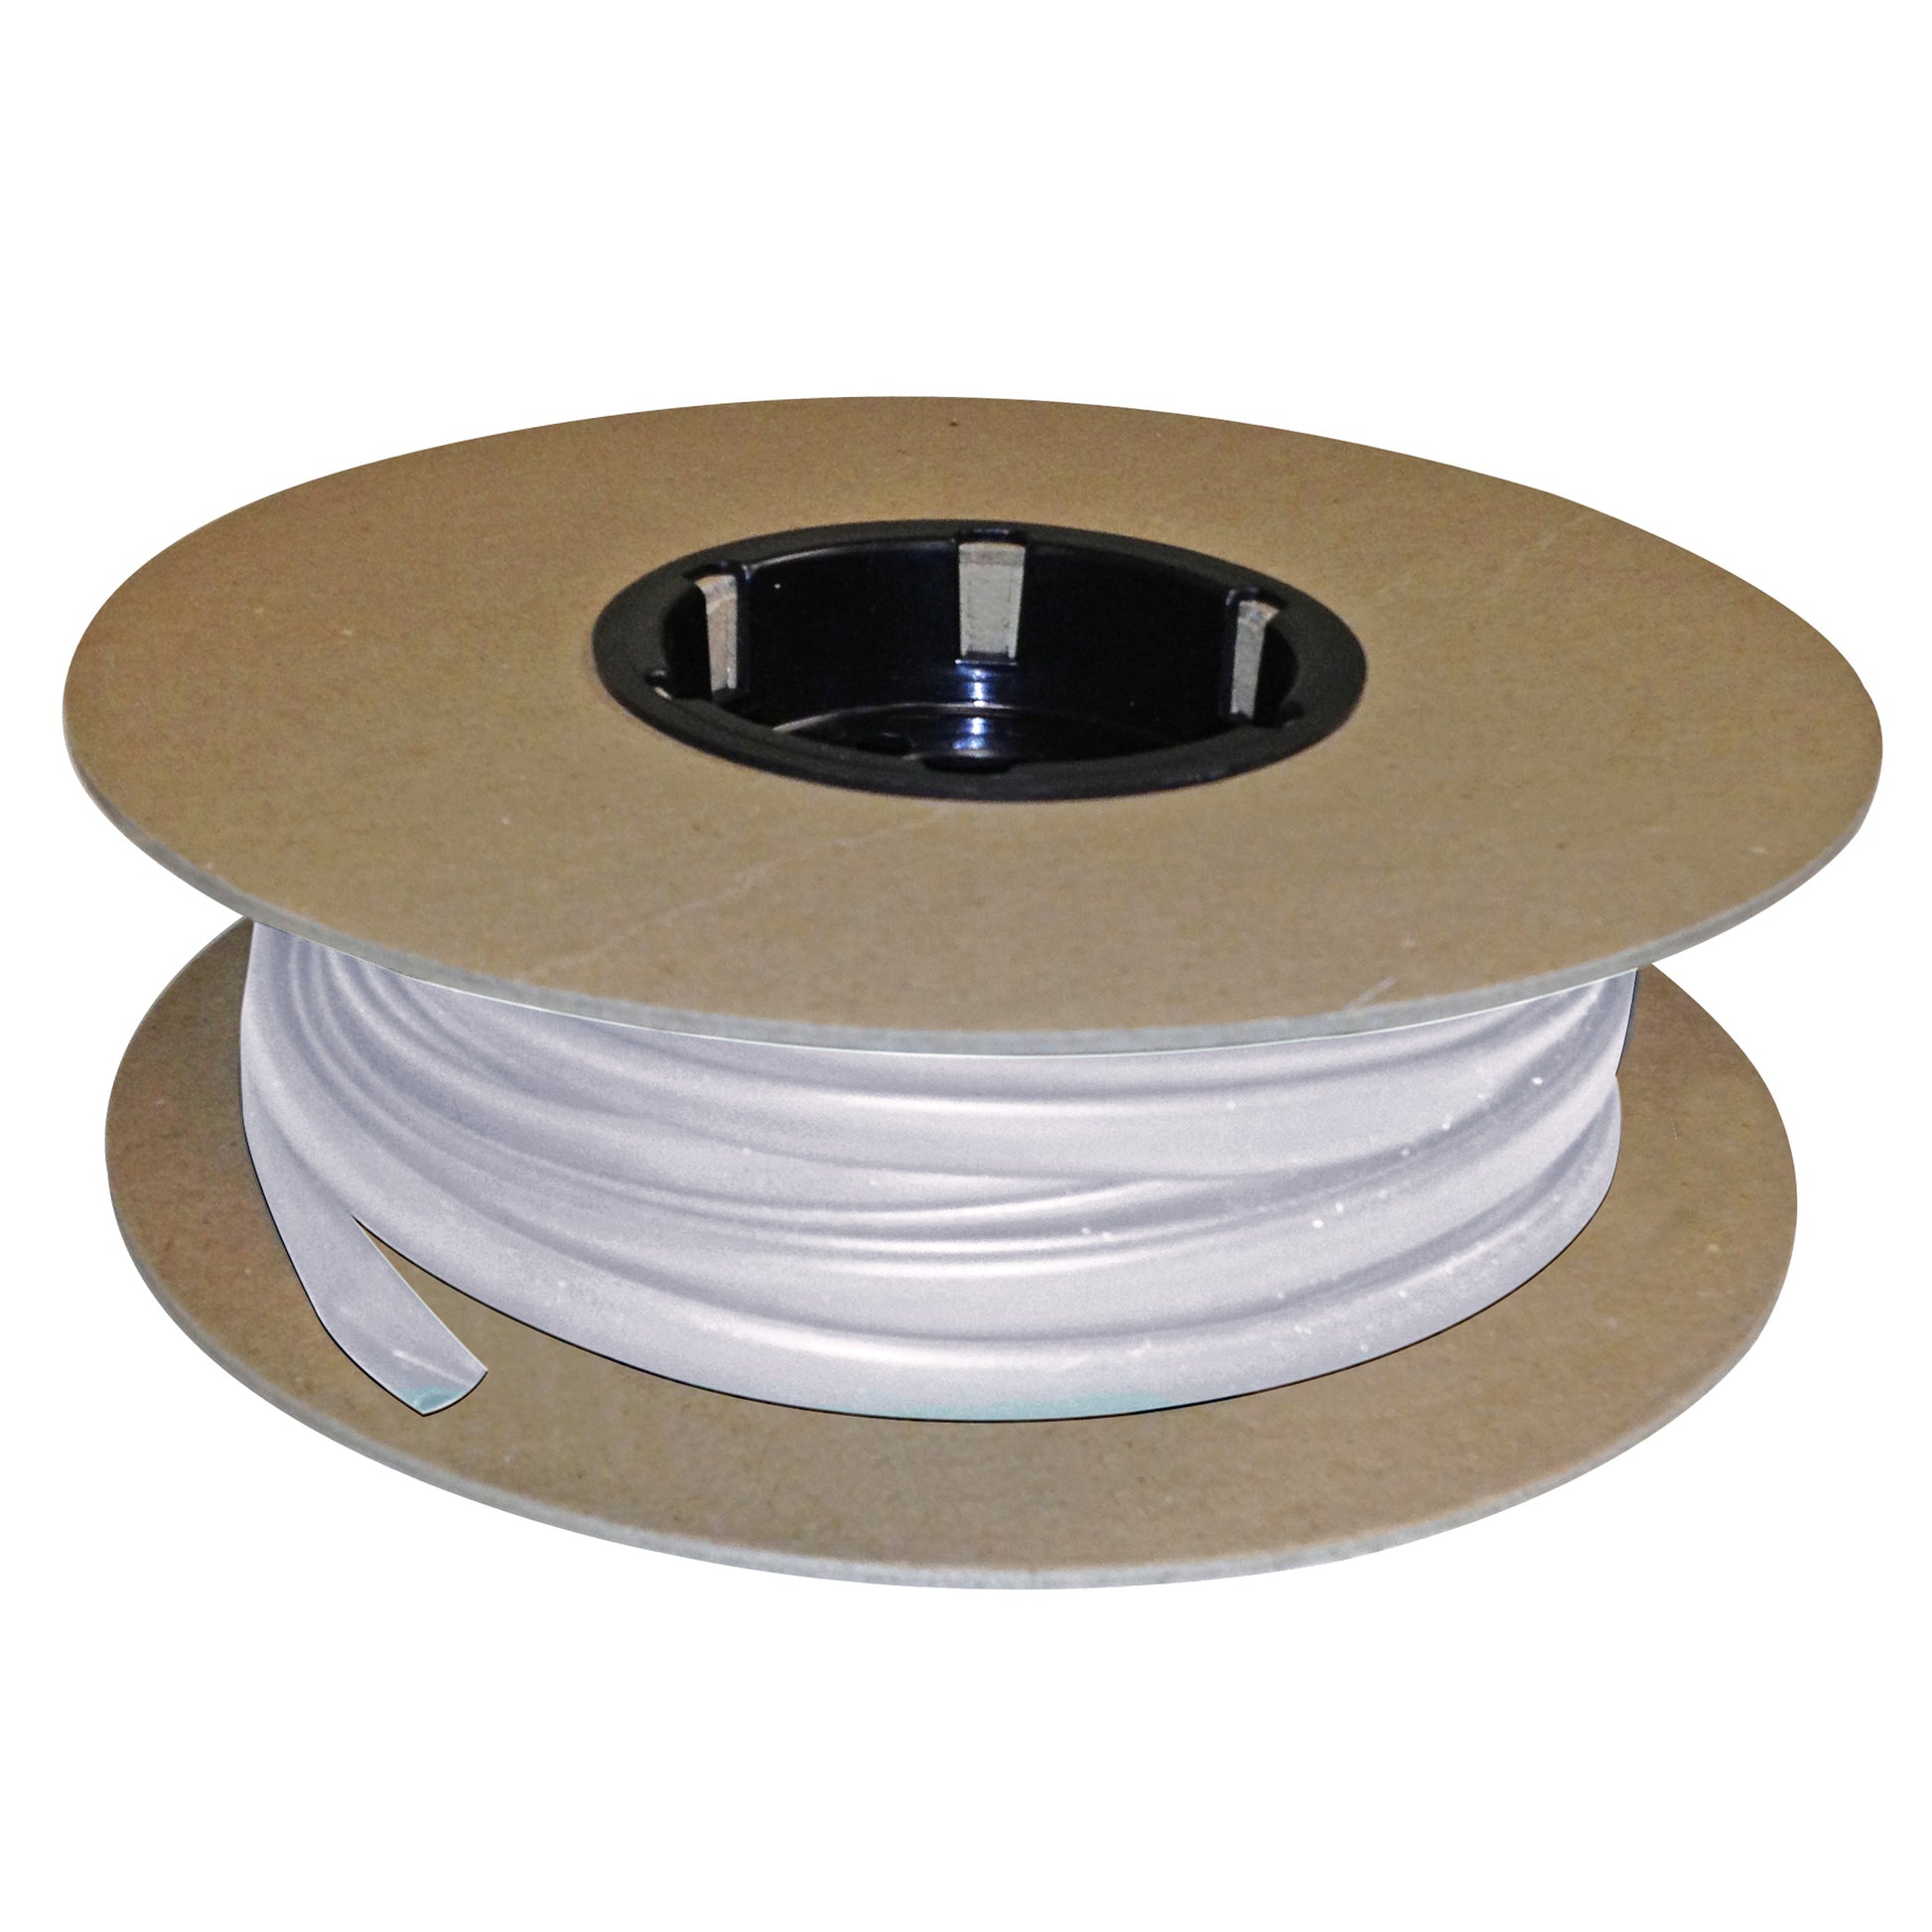 Flexible Thin Single Wall Non-Adhesive Heat Shrink Tubing 2:1 Clear 1/2" ID - 25' Ft Spool